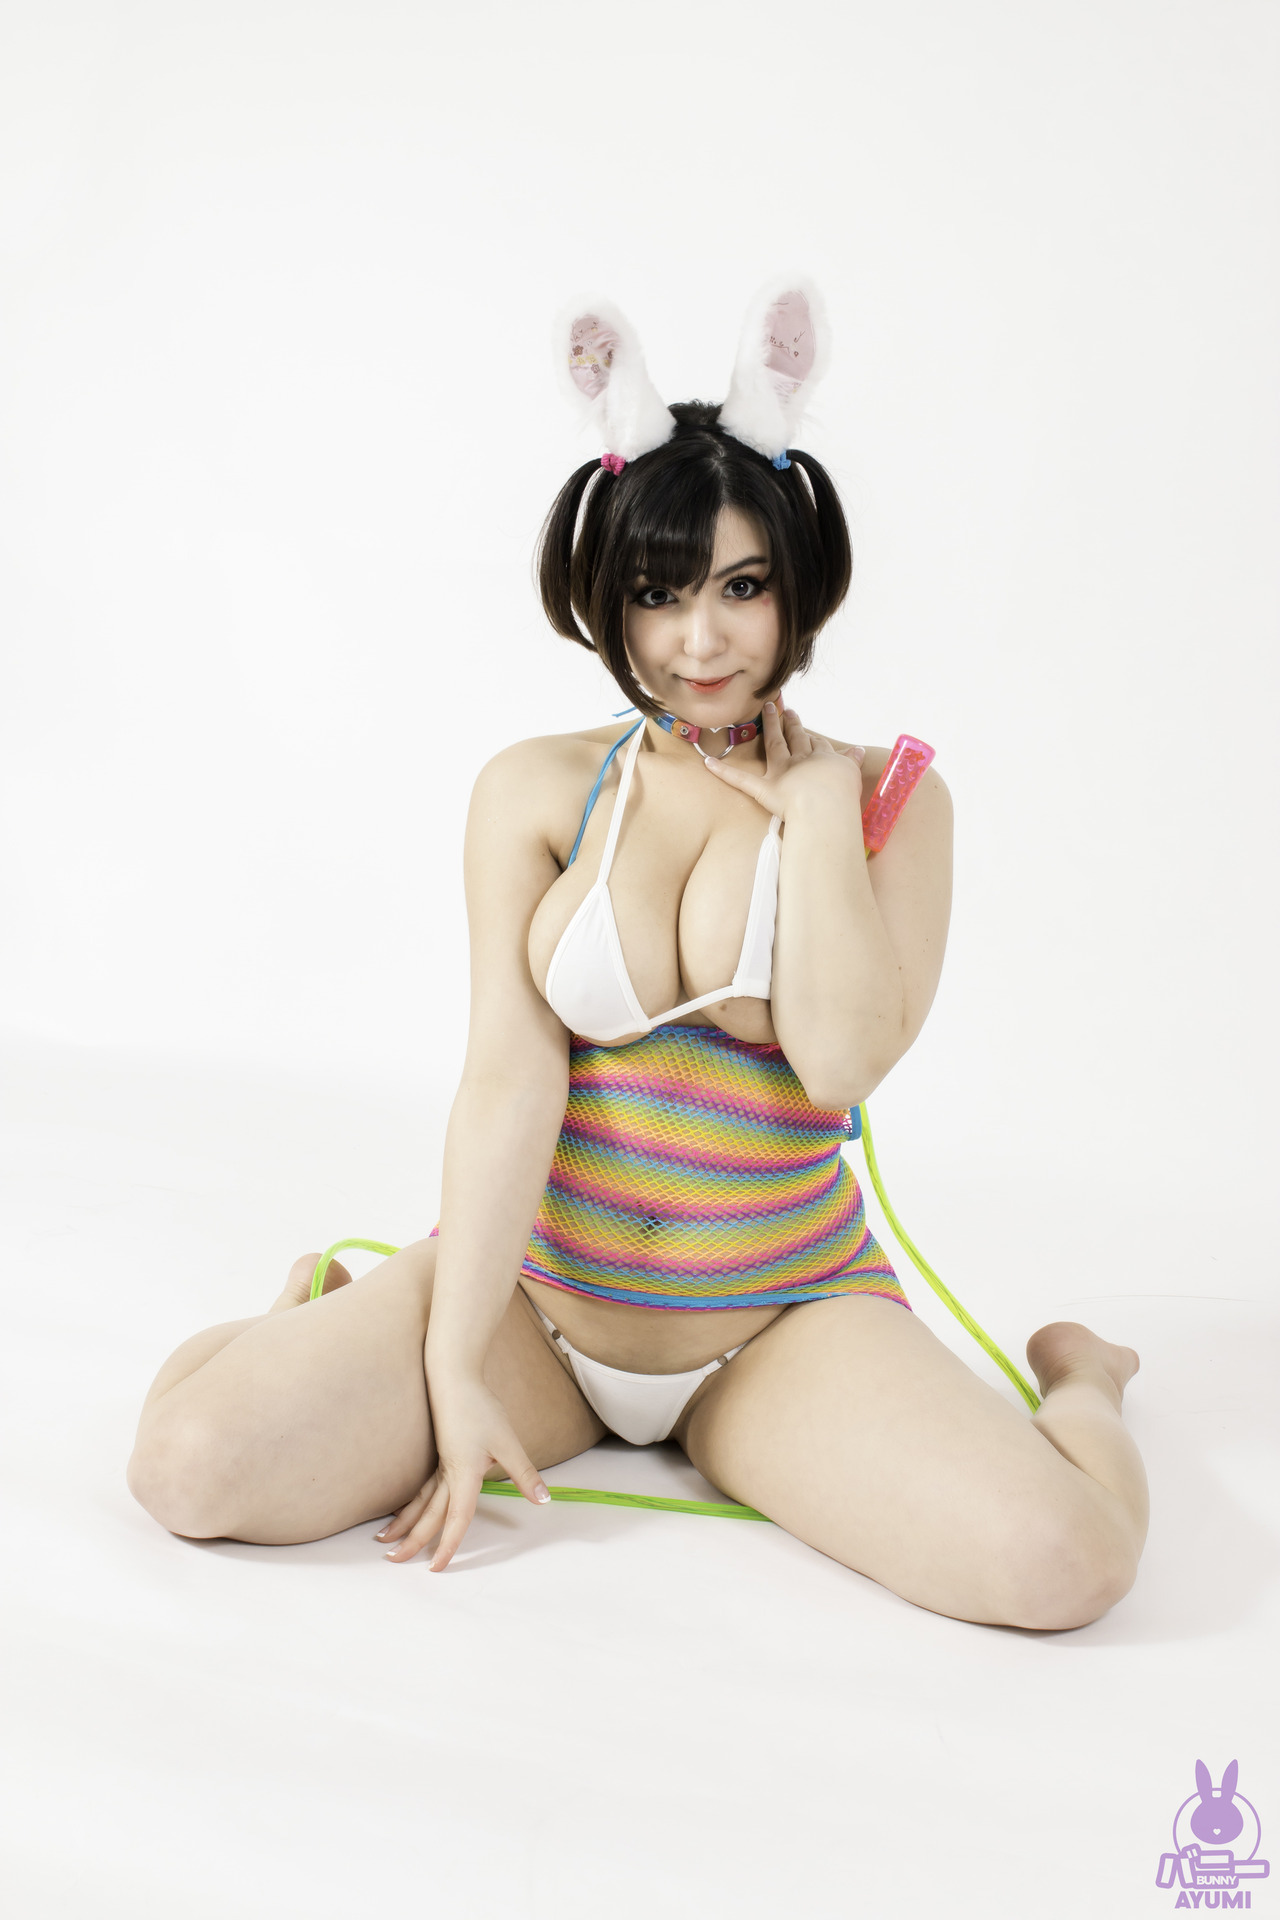 Bunny ayumi sets